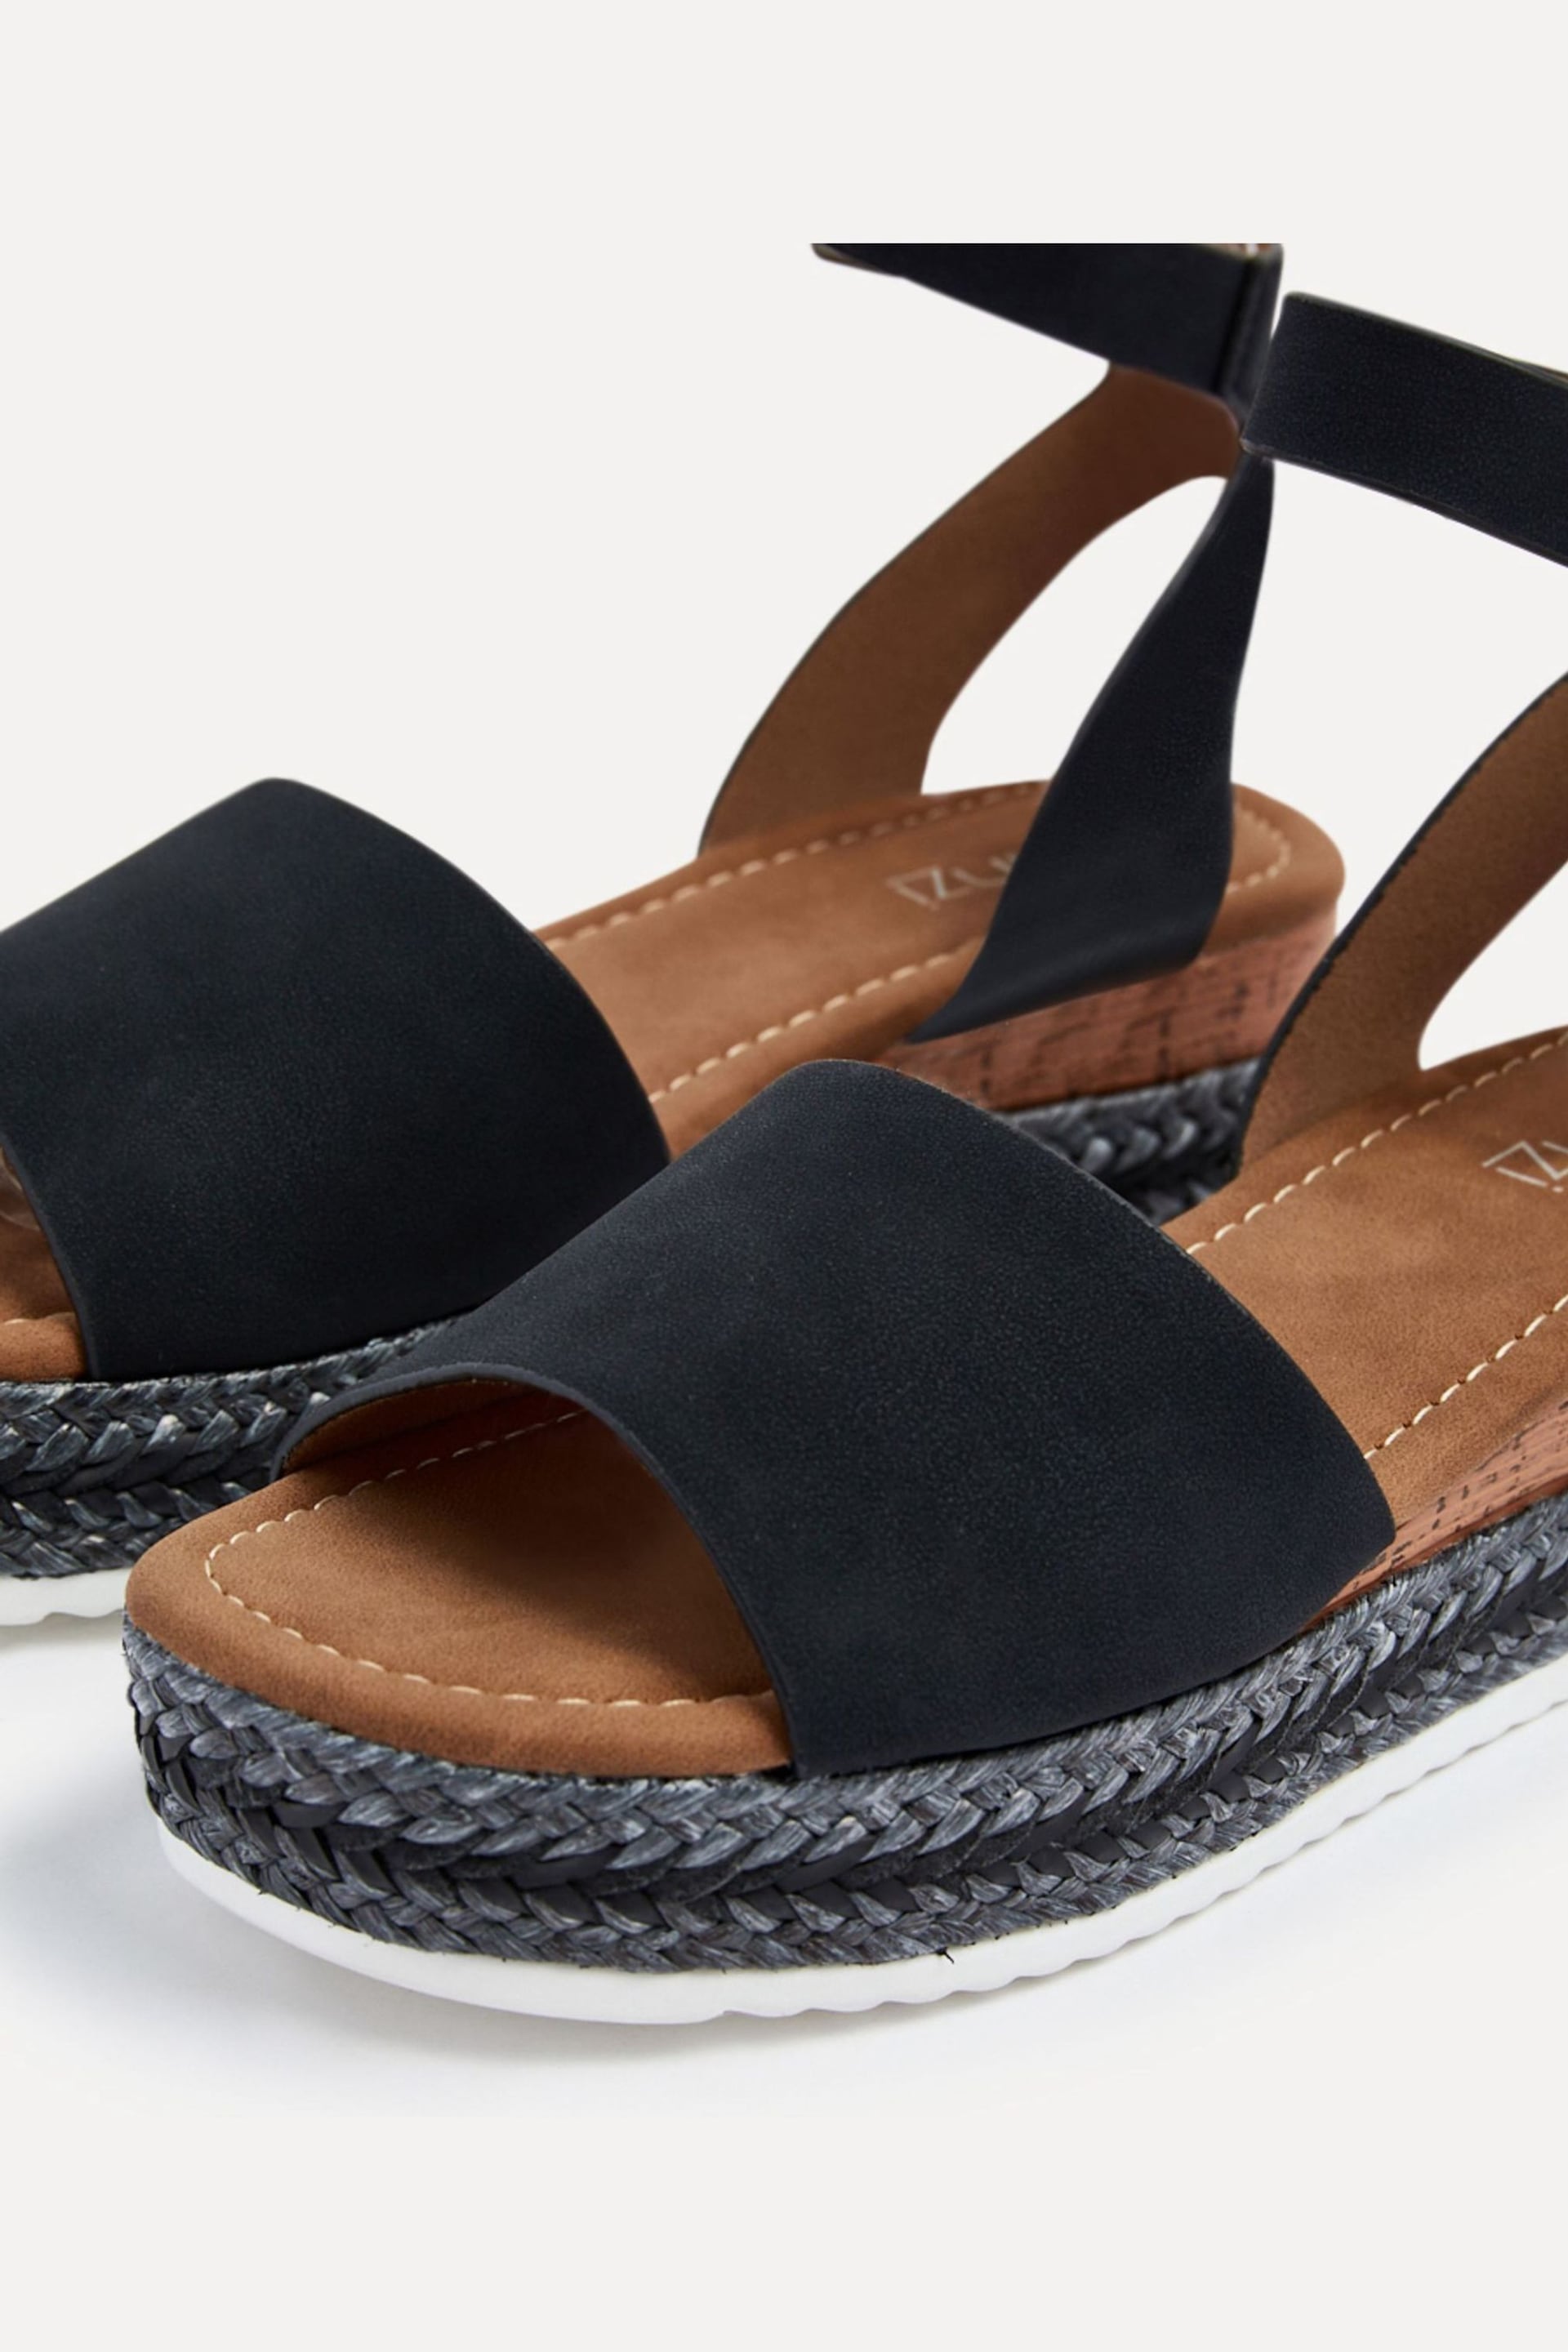 Linzi Black Wide Fit Arizona Espadrille Flatform Shoes With Plaited Sole - Image 4 of 5